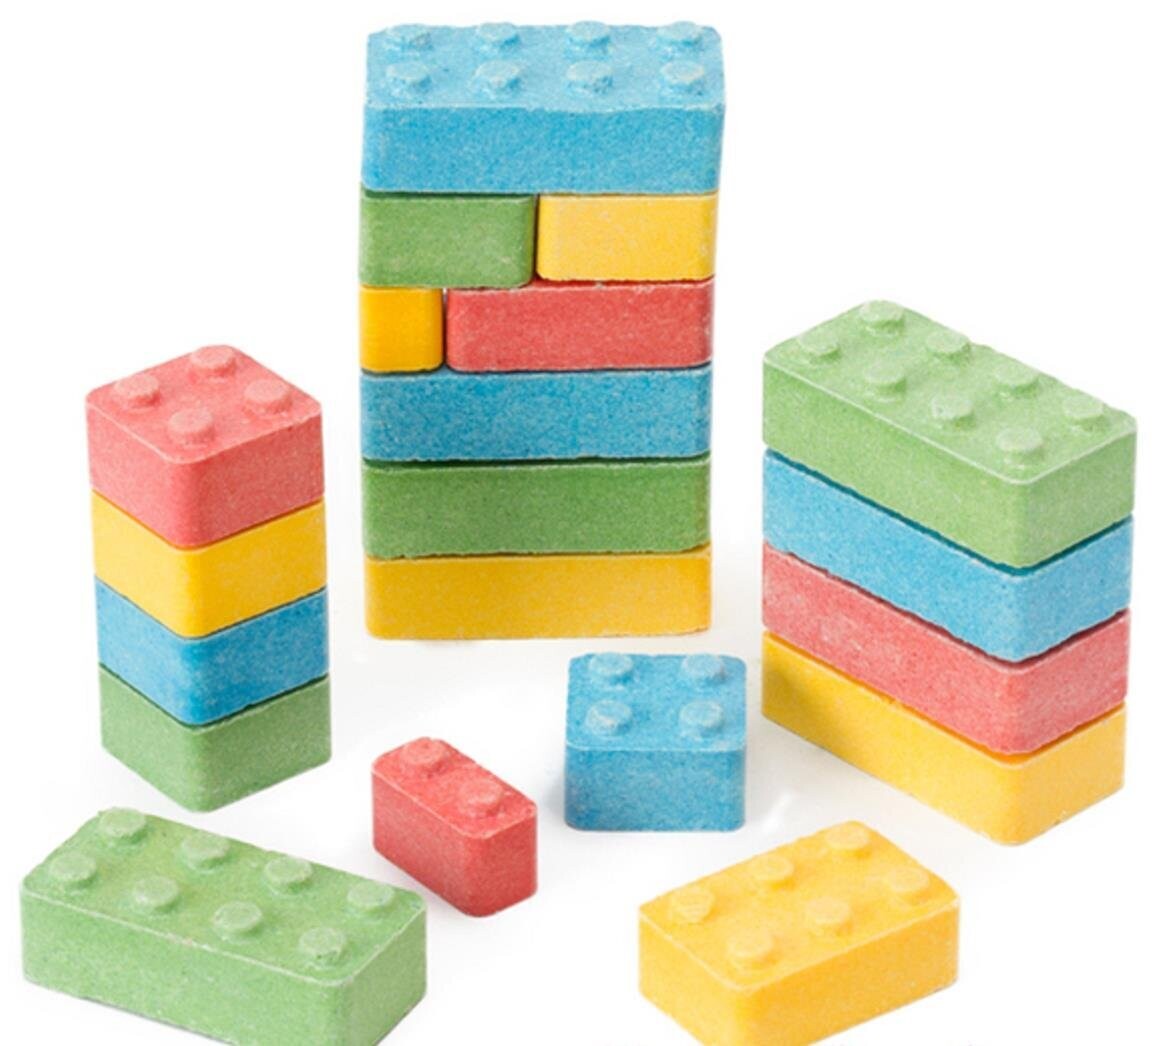 Candy Legos